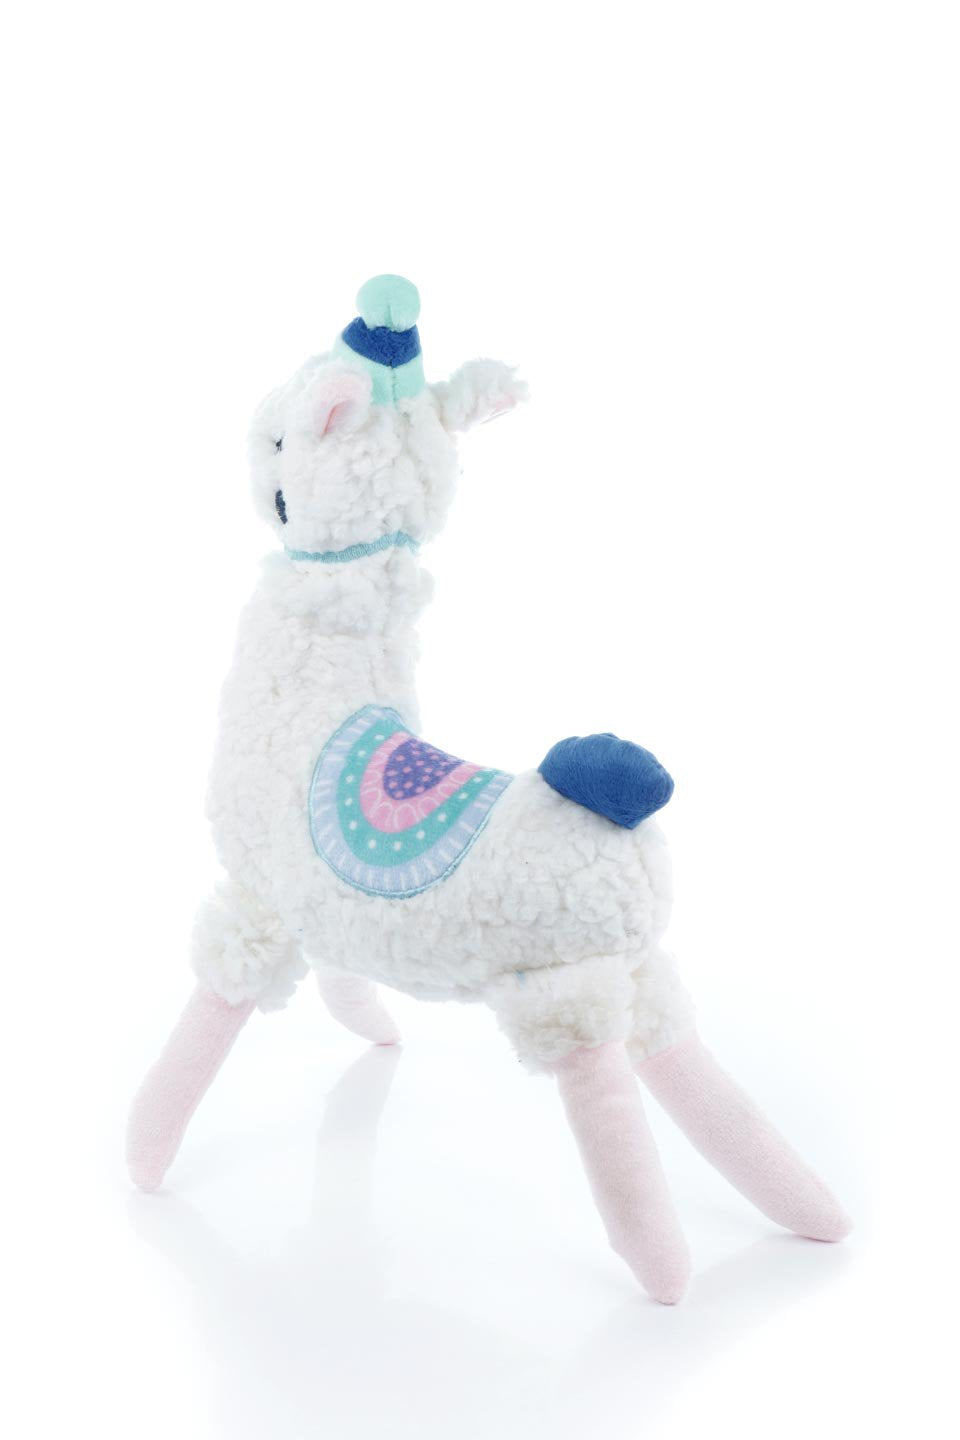 Plush Alpaca Dog Toy 白いアルパカ・犬用オモチャ